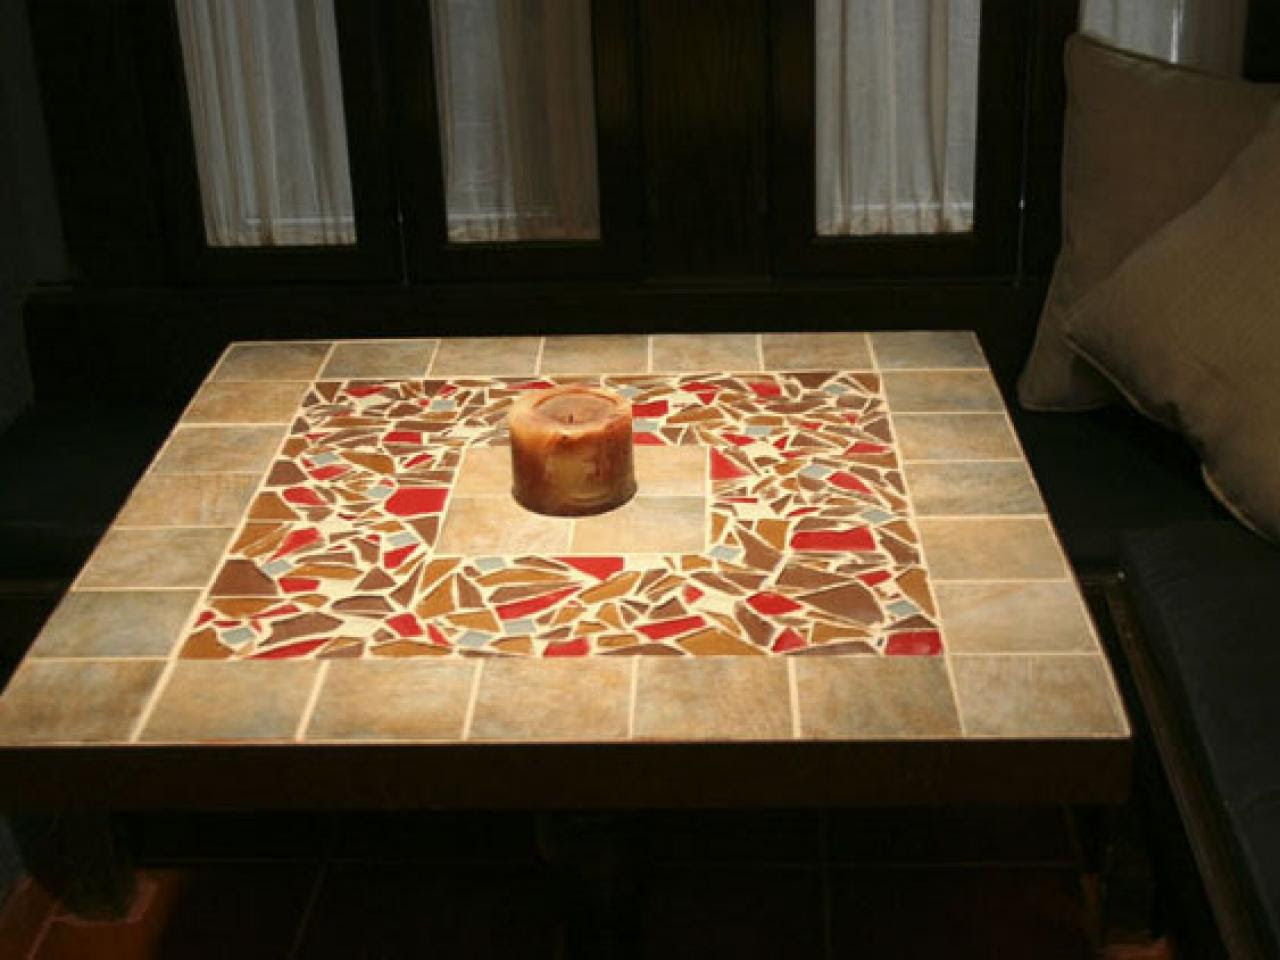 Terbaru 40 Tile Table Top Ideas, Ceramic Tile Table Top